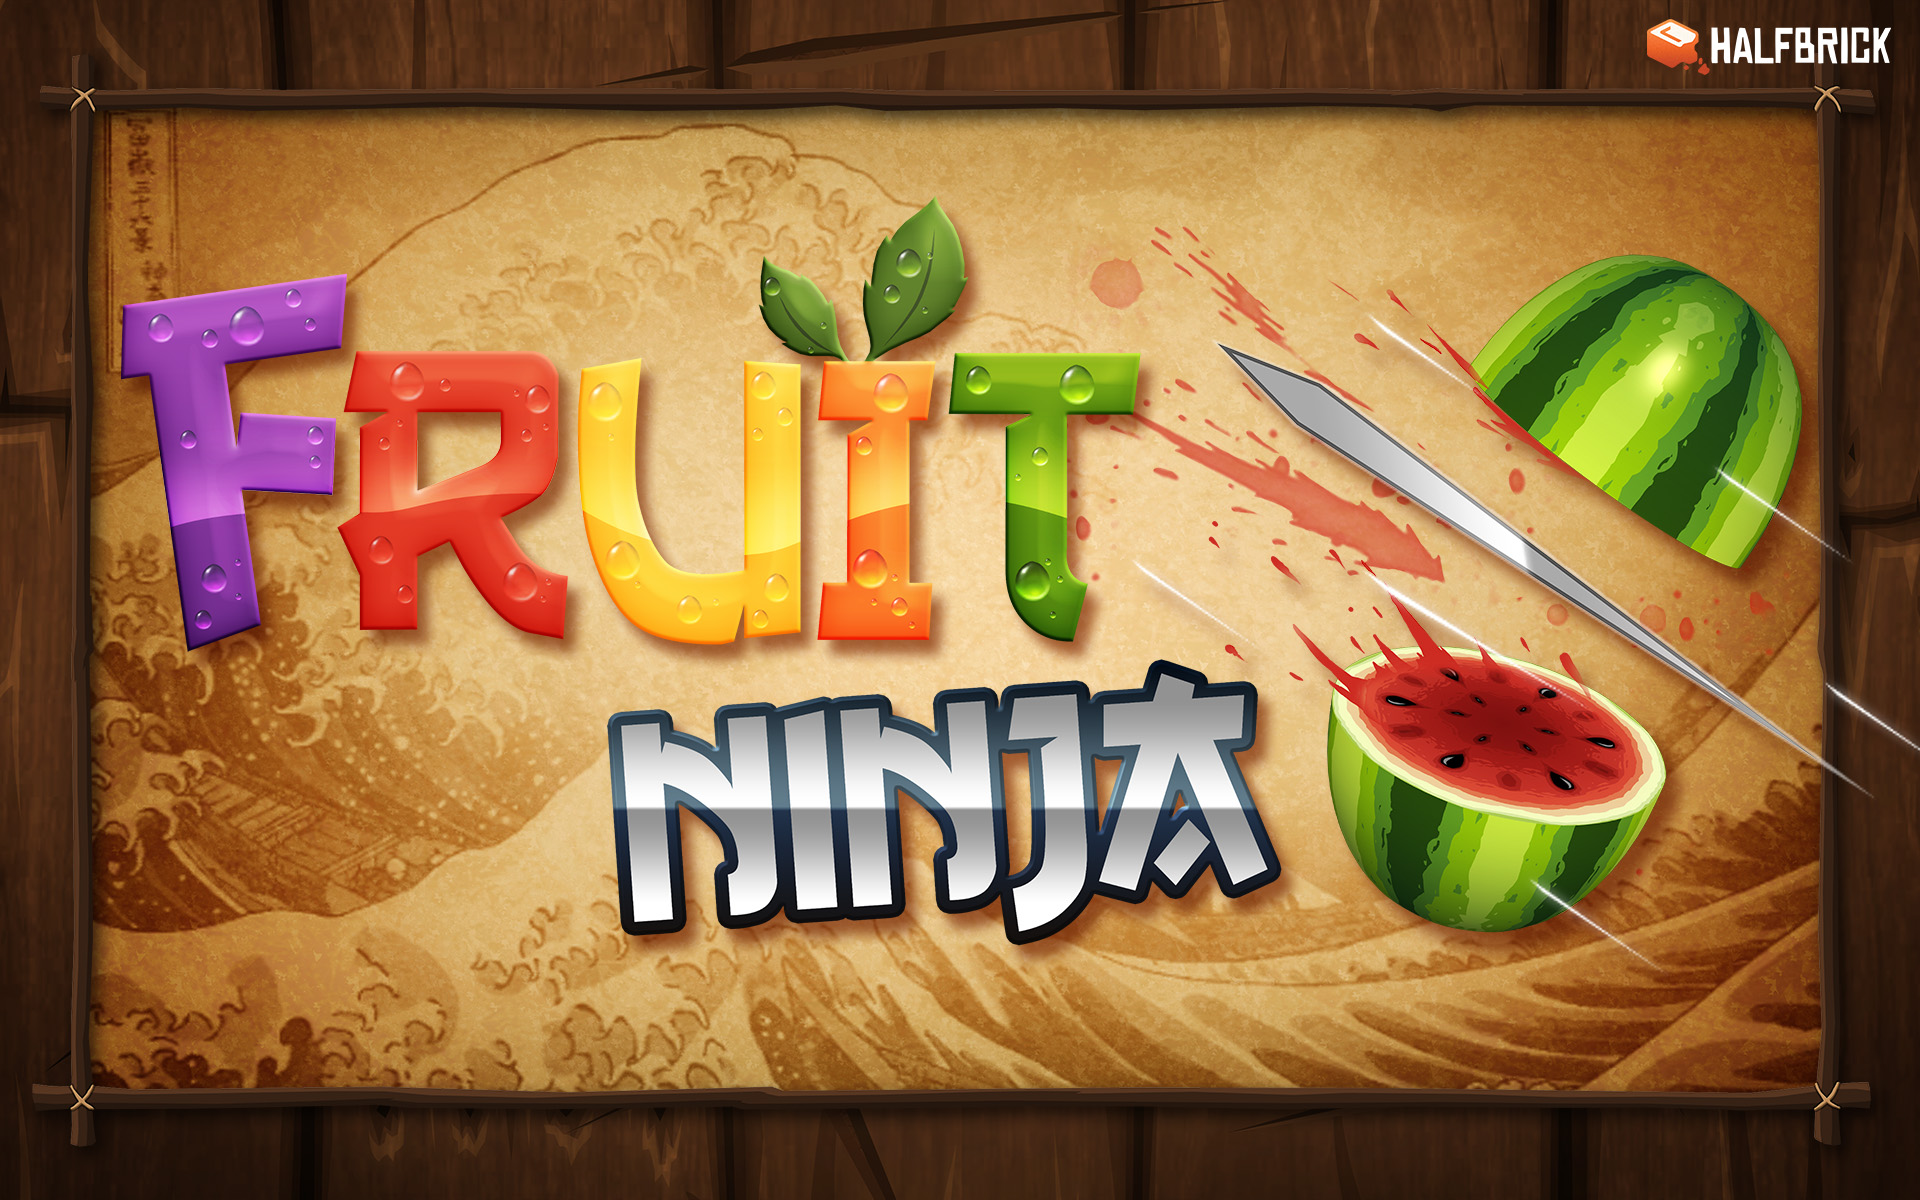 fruit-ninja